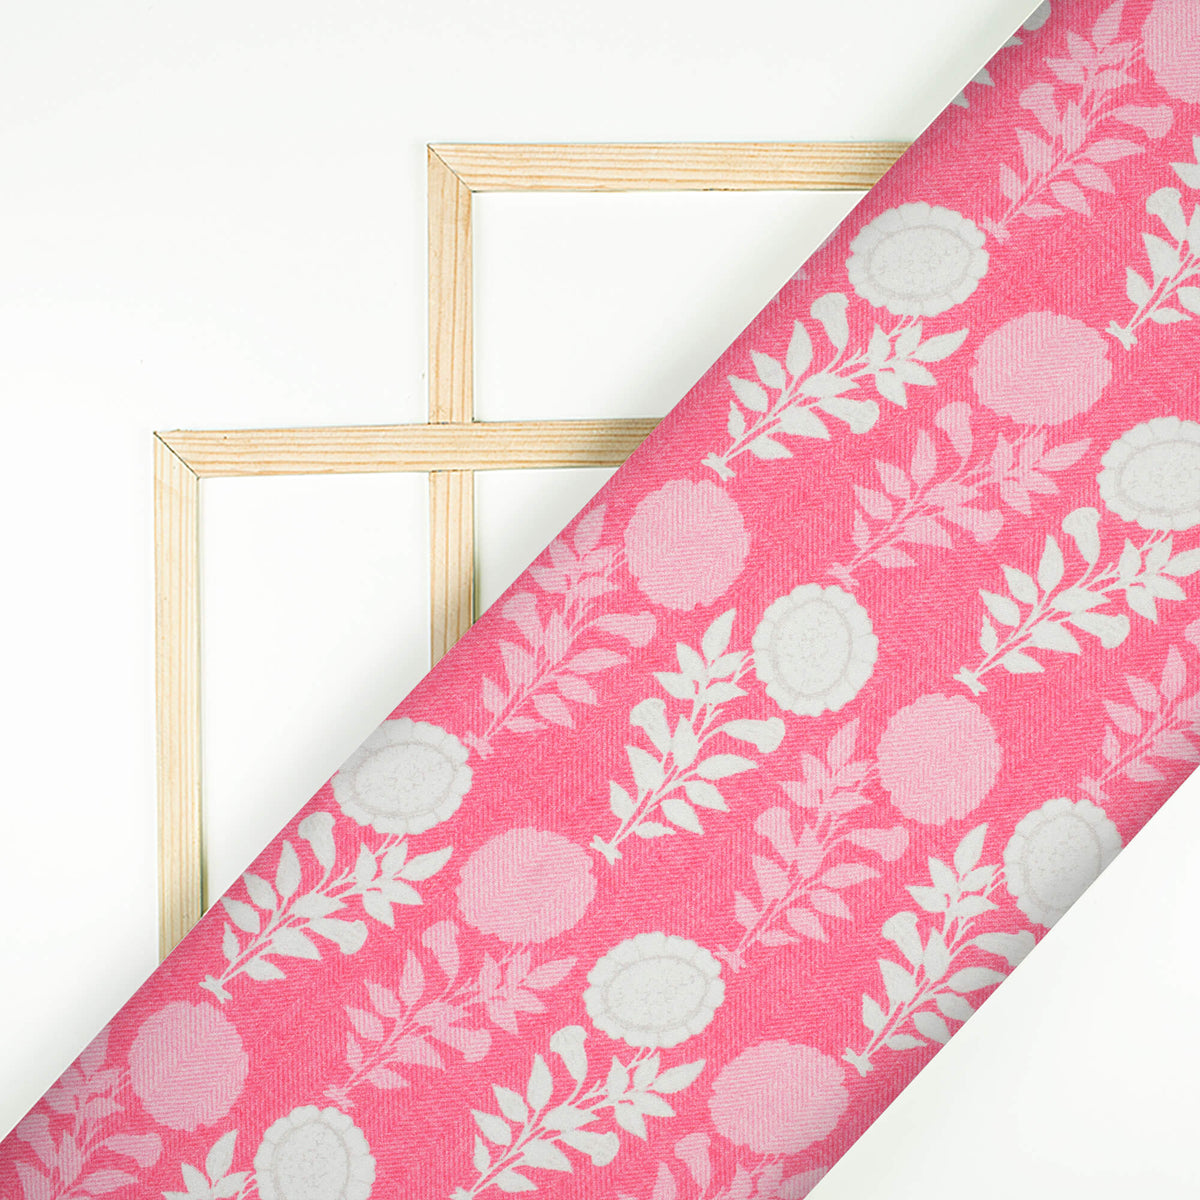 Hot Pink And White Floral Pattern Digital Print Premium Lush Satin Fabric